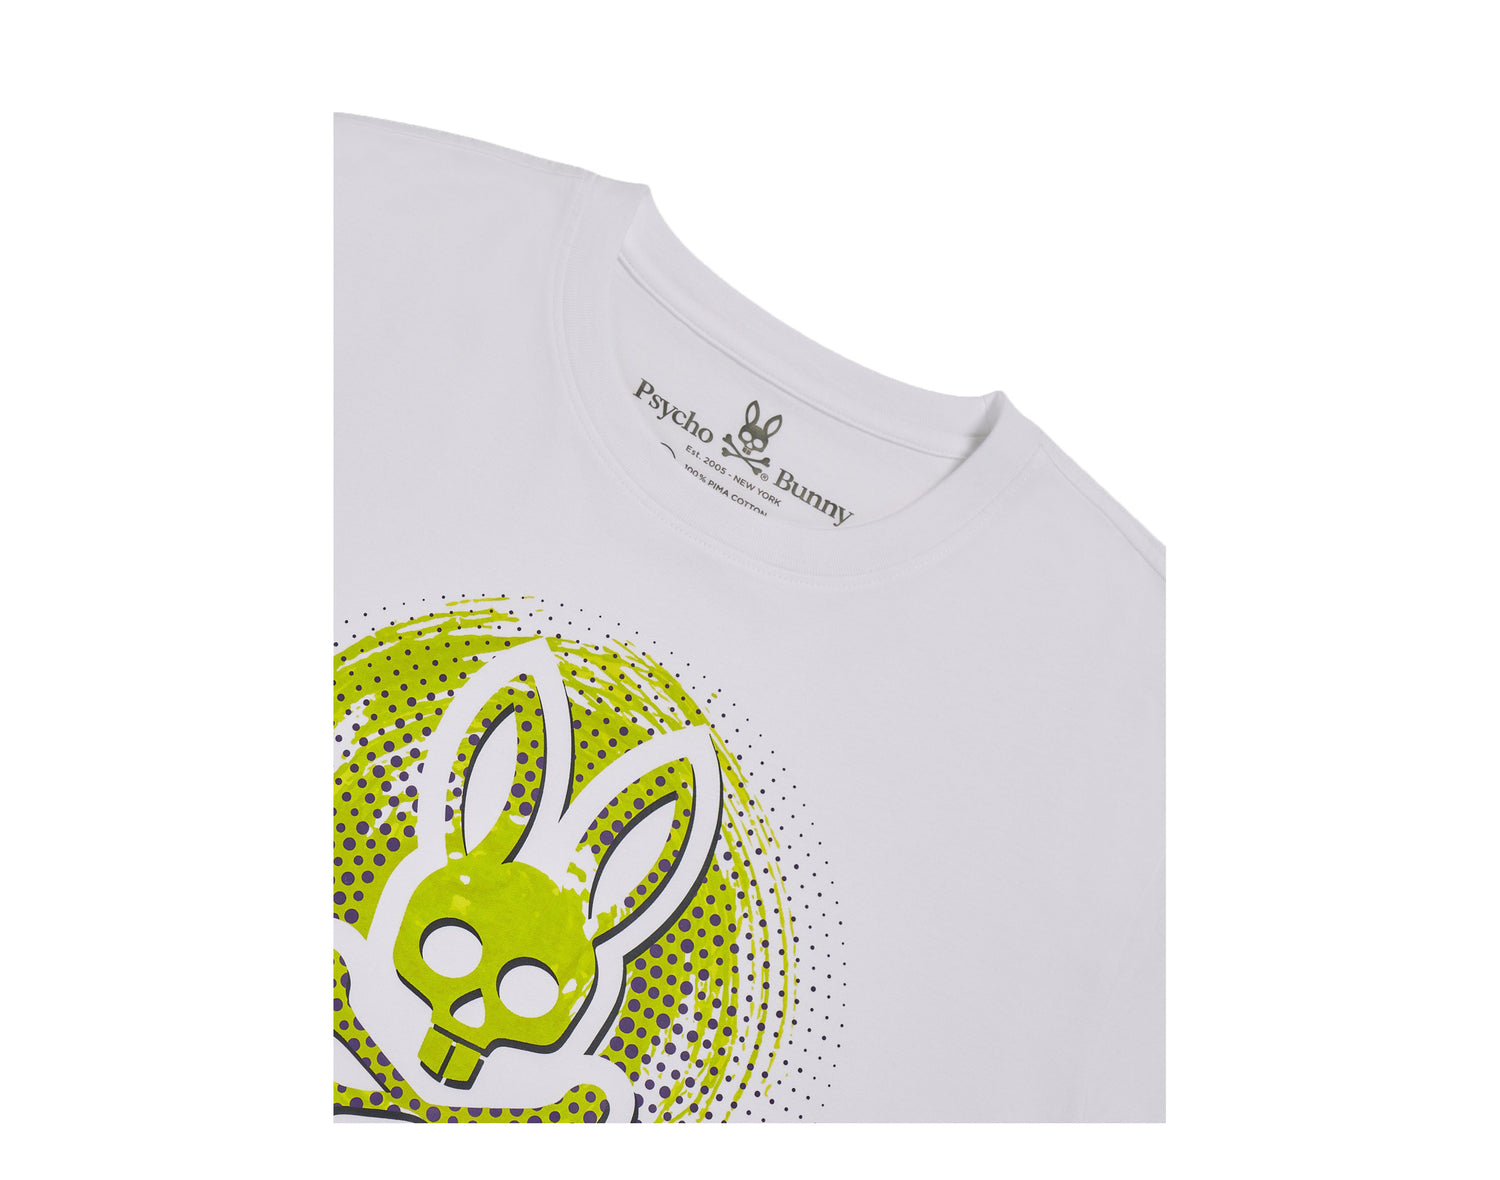 Psycho Bunny Downey Graphic Men's Tee Shirt